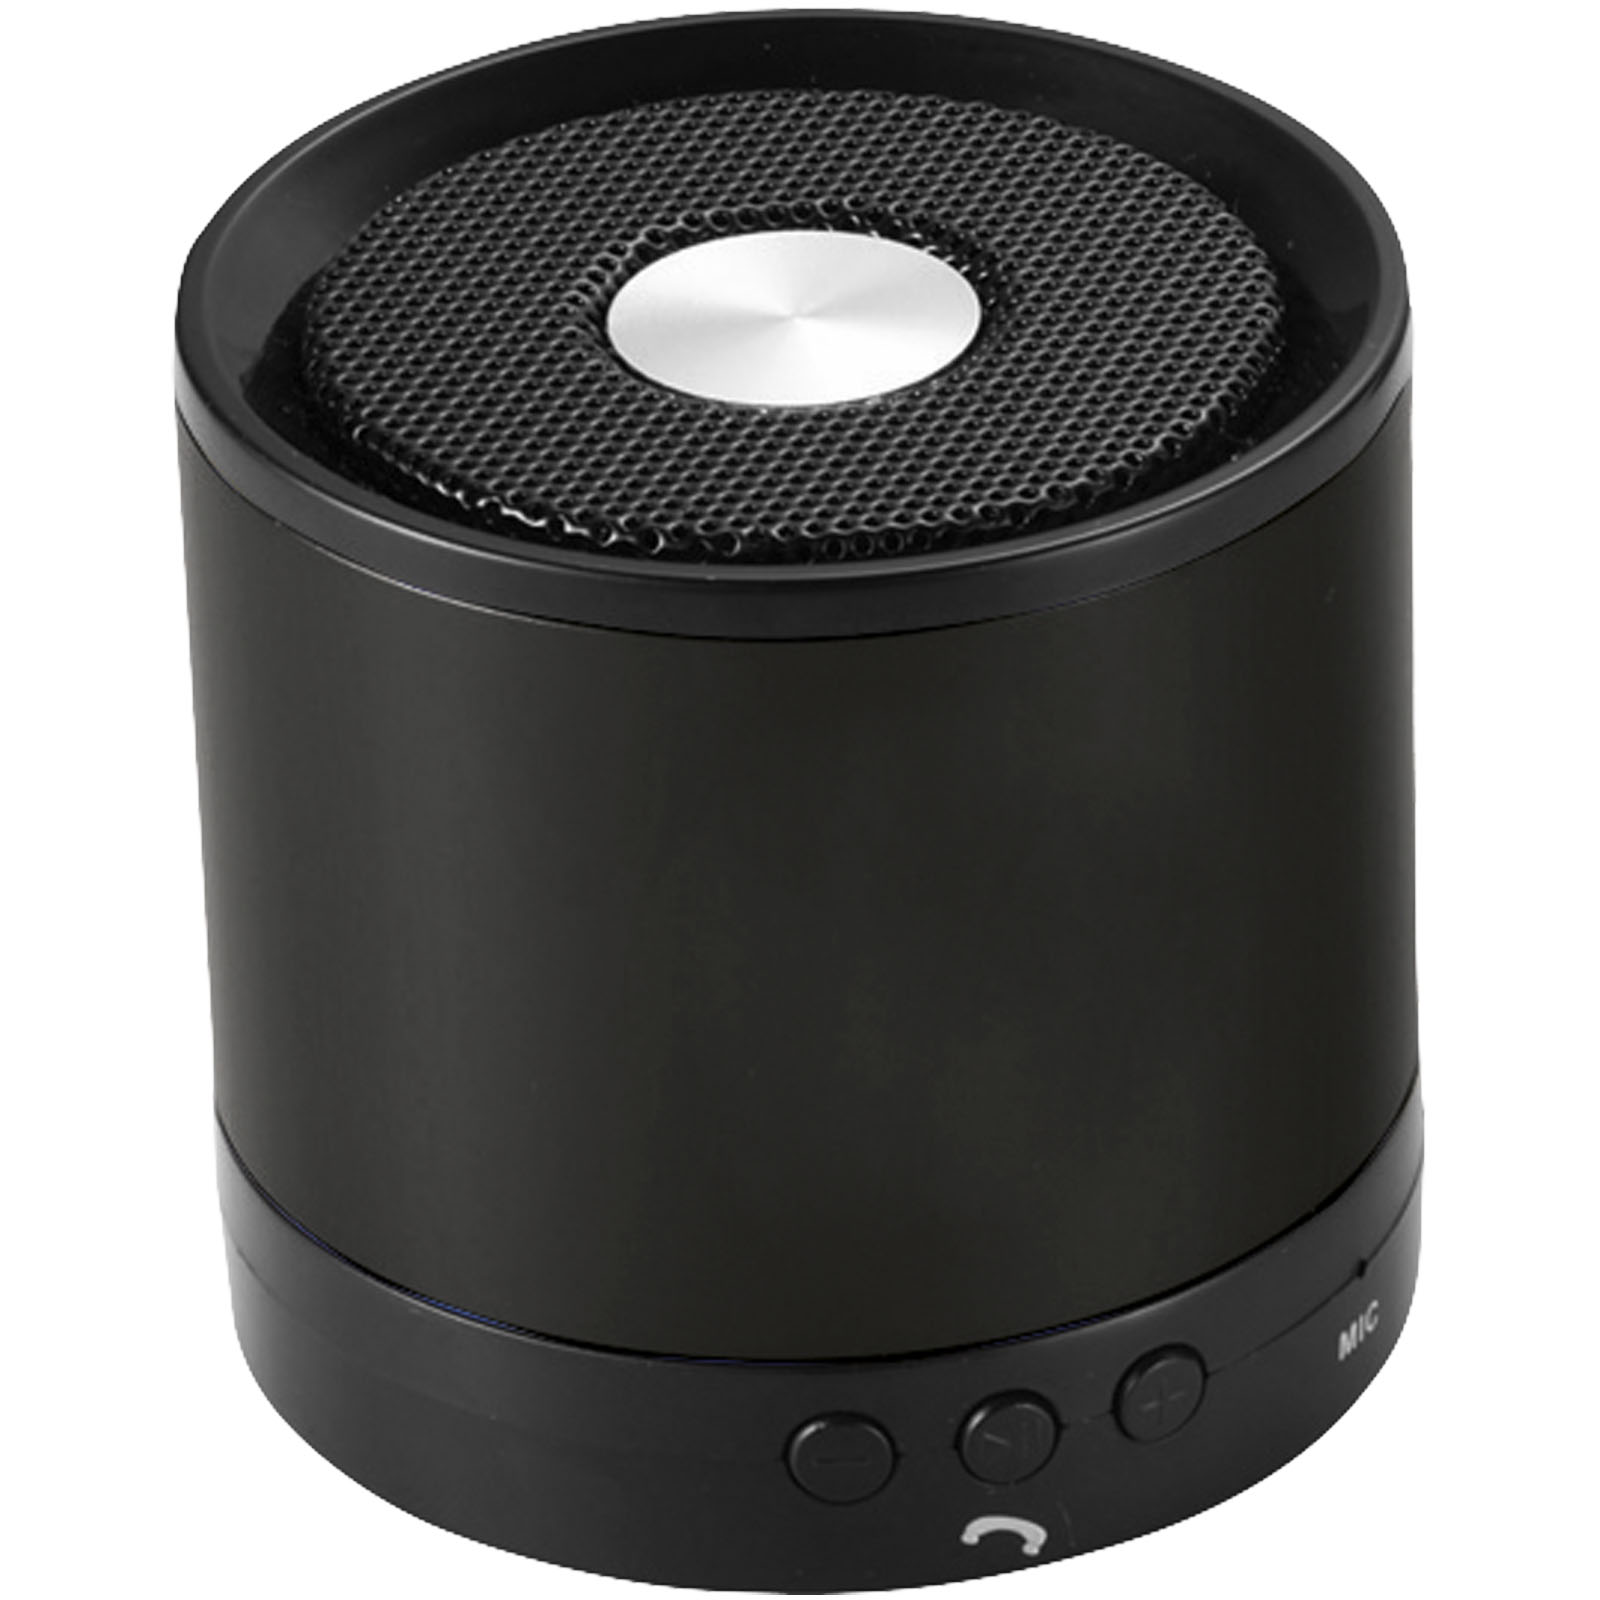 Portable Bluetooth Speaker - Hulcott - Waldron